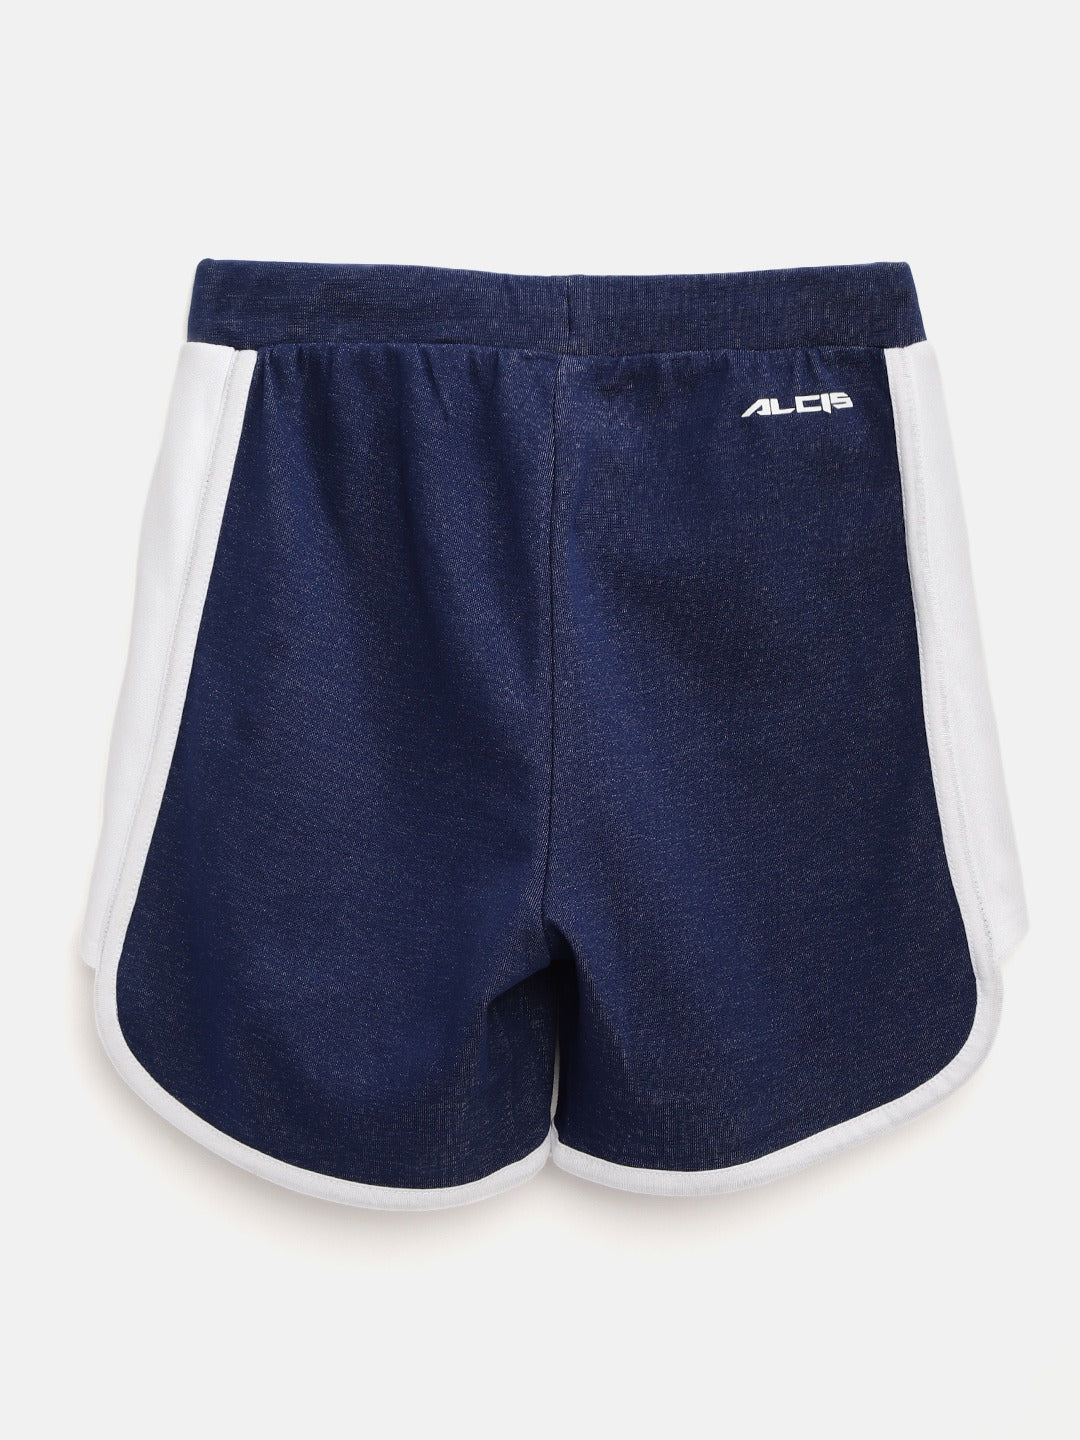 Alcis Girls Navy Blue Printed Detail Regular Fit Running Shorts